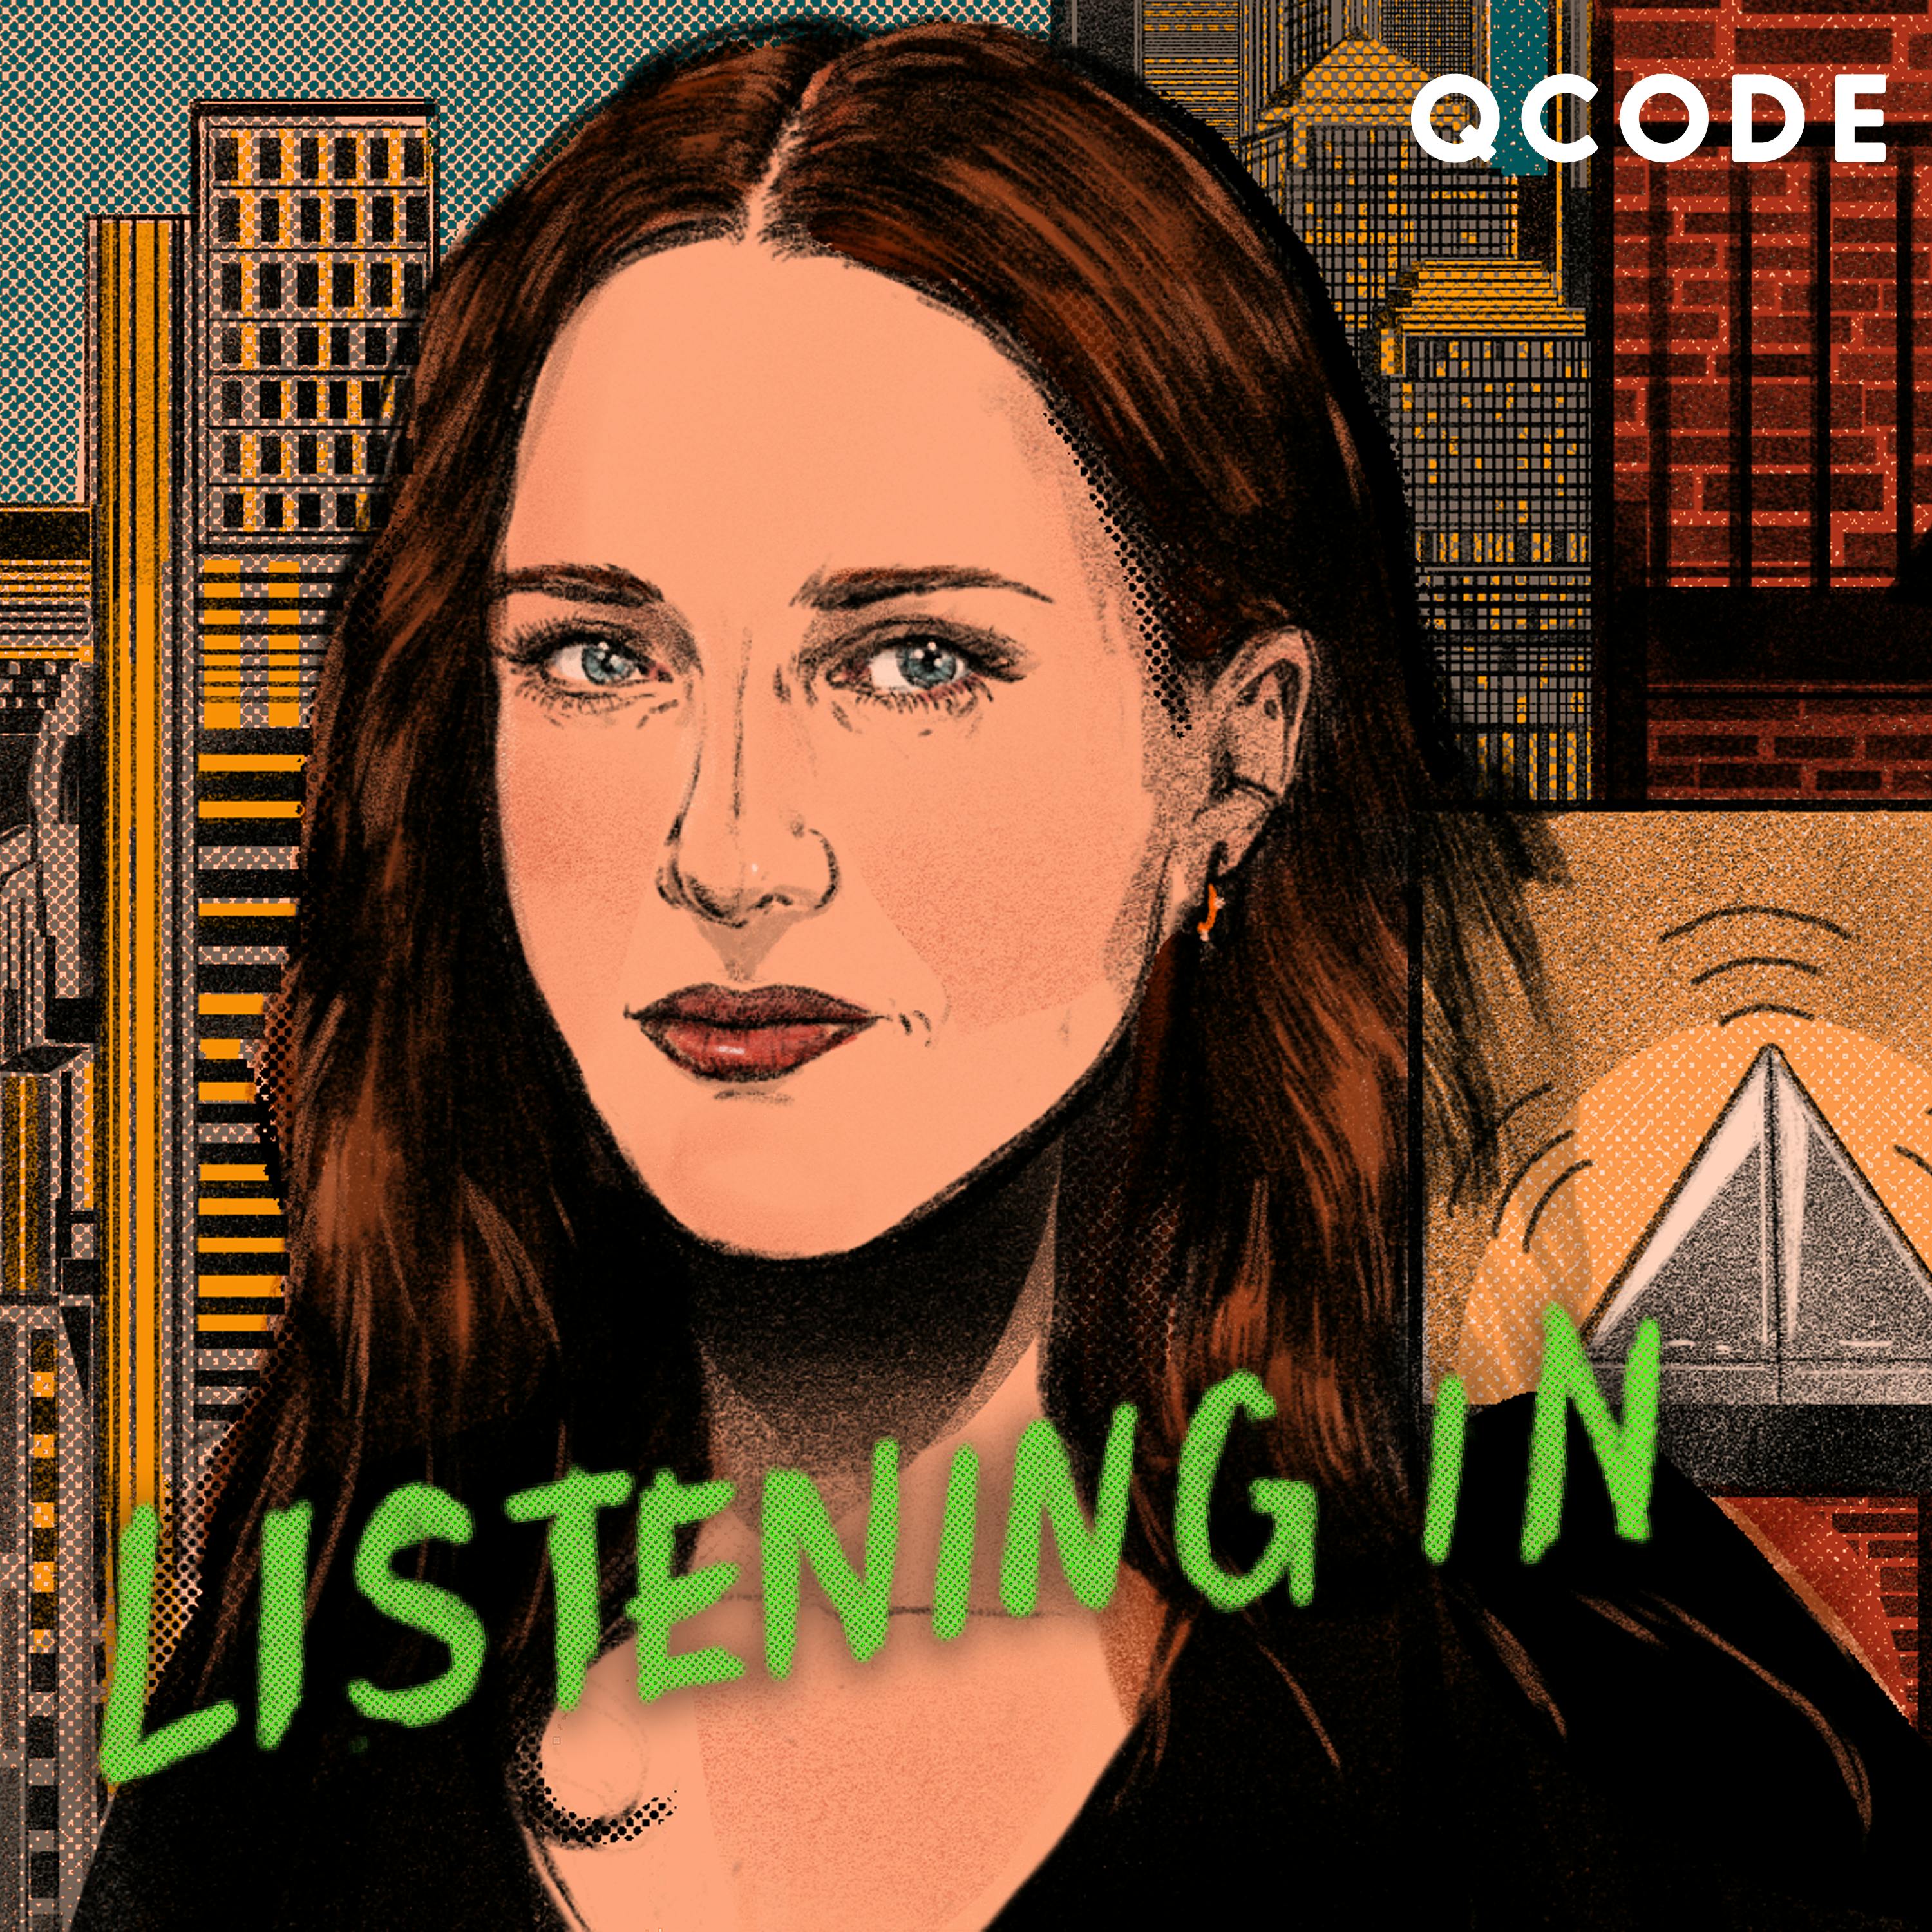 BONUS:  Rachel Brosnahan and Creator Sabrina Jaglom on ”The Making Of Listening In”